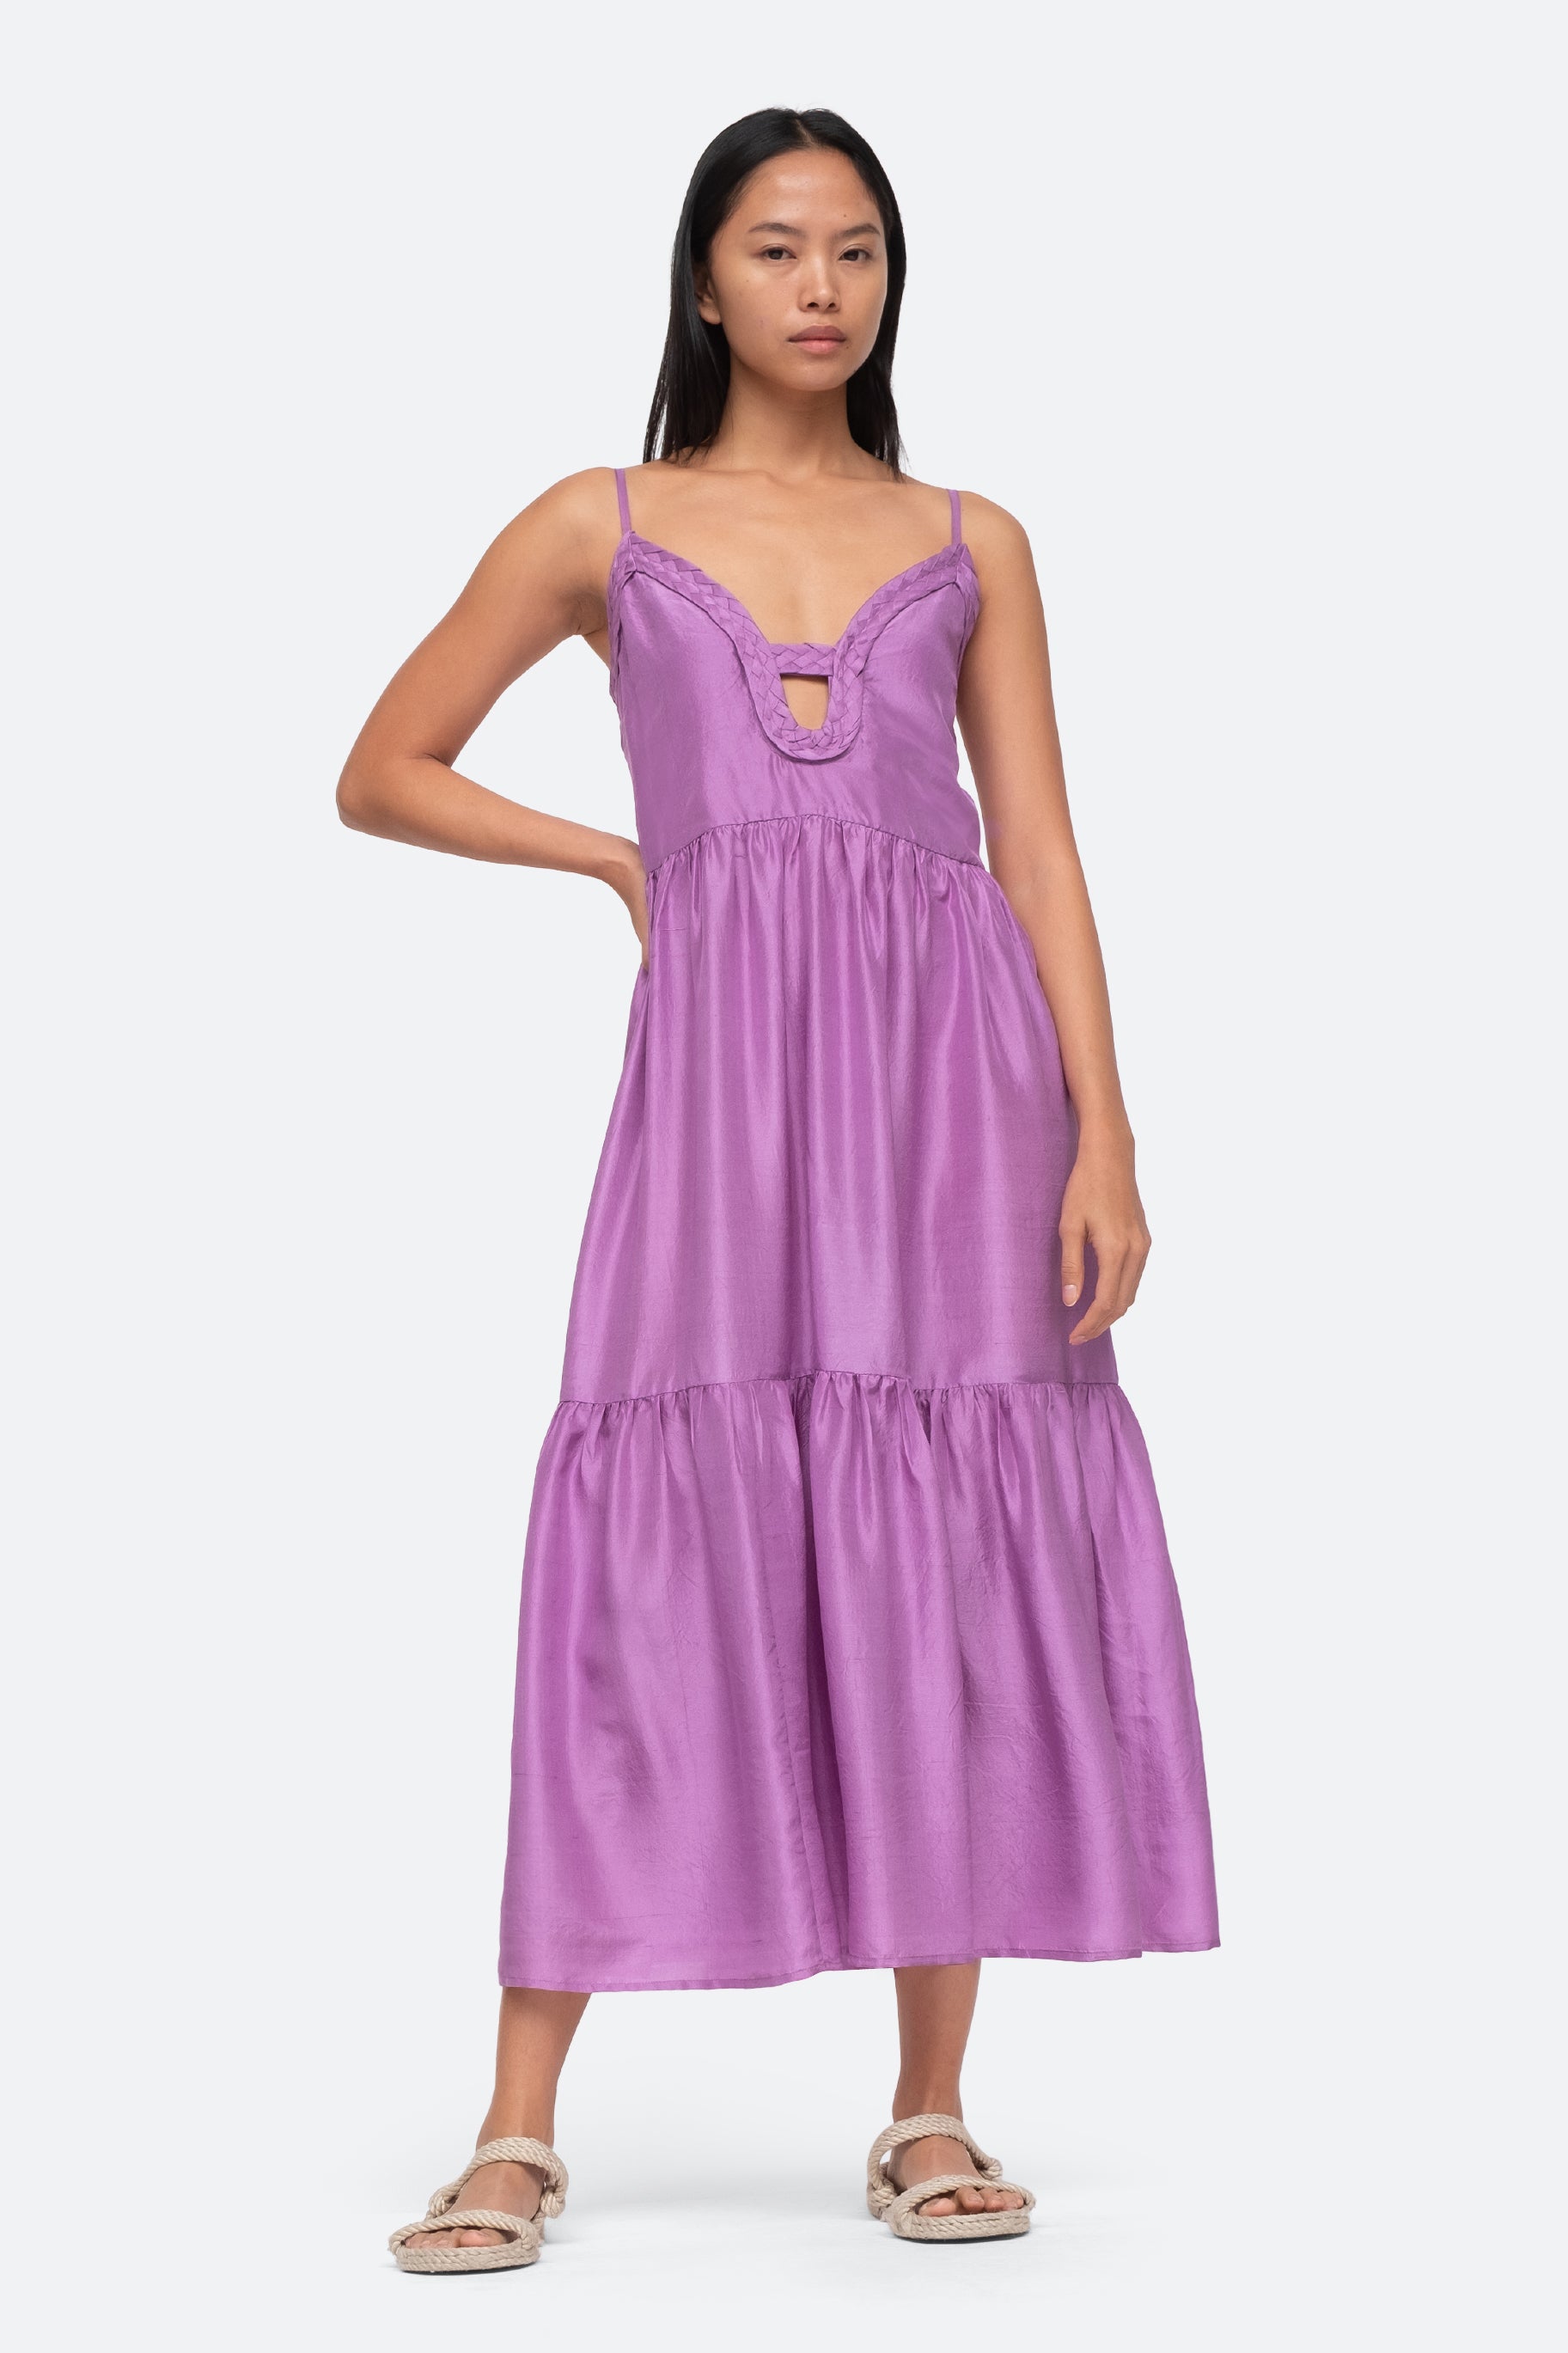 SEA Kyle Solid Silk Slip Dress in Lavender